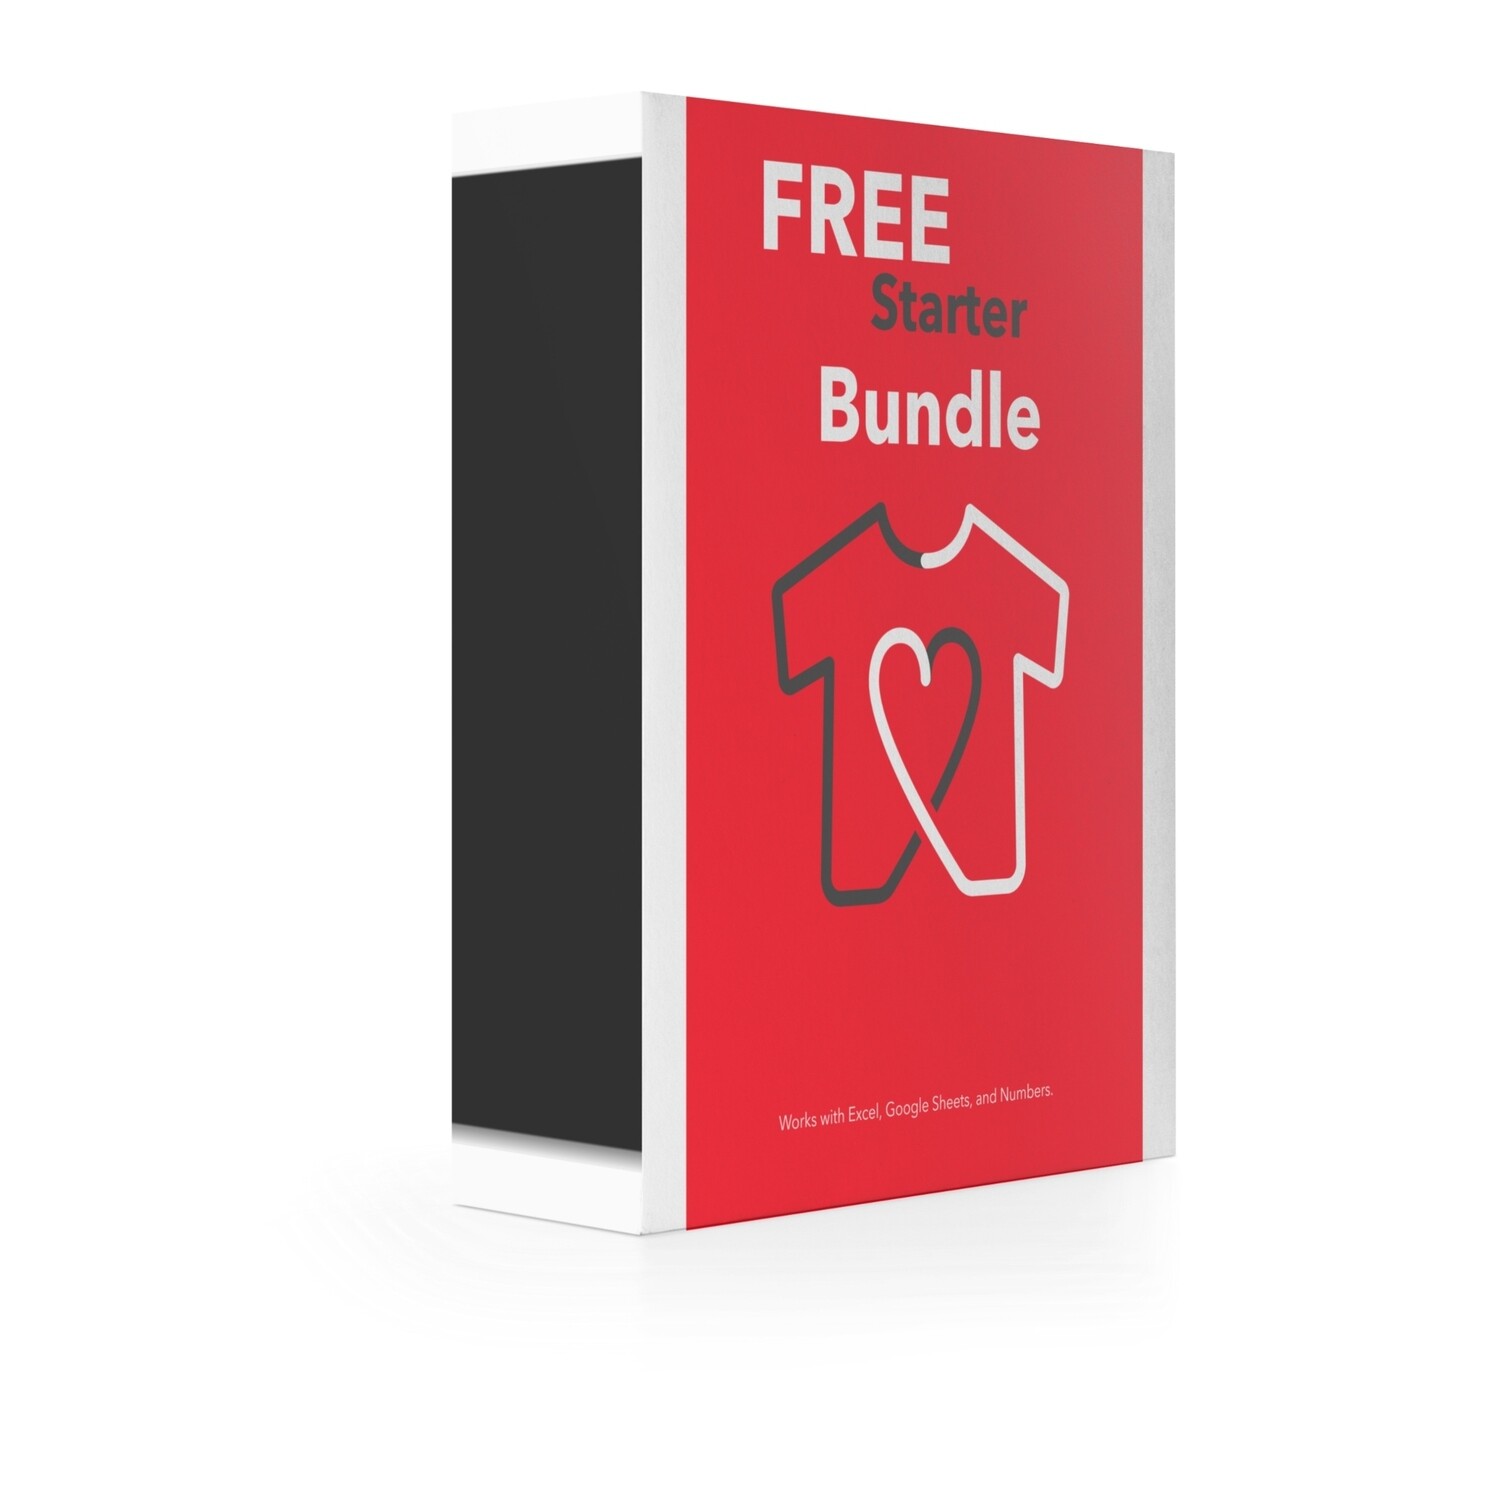 FREE Starter Bundle | Retail-Wholesale | Design Setup Cost